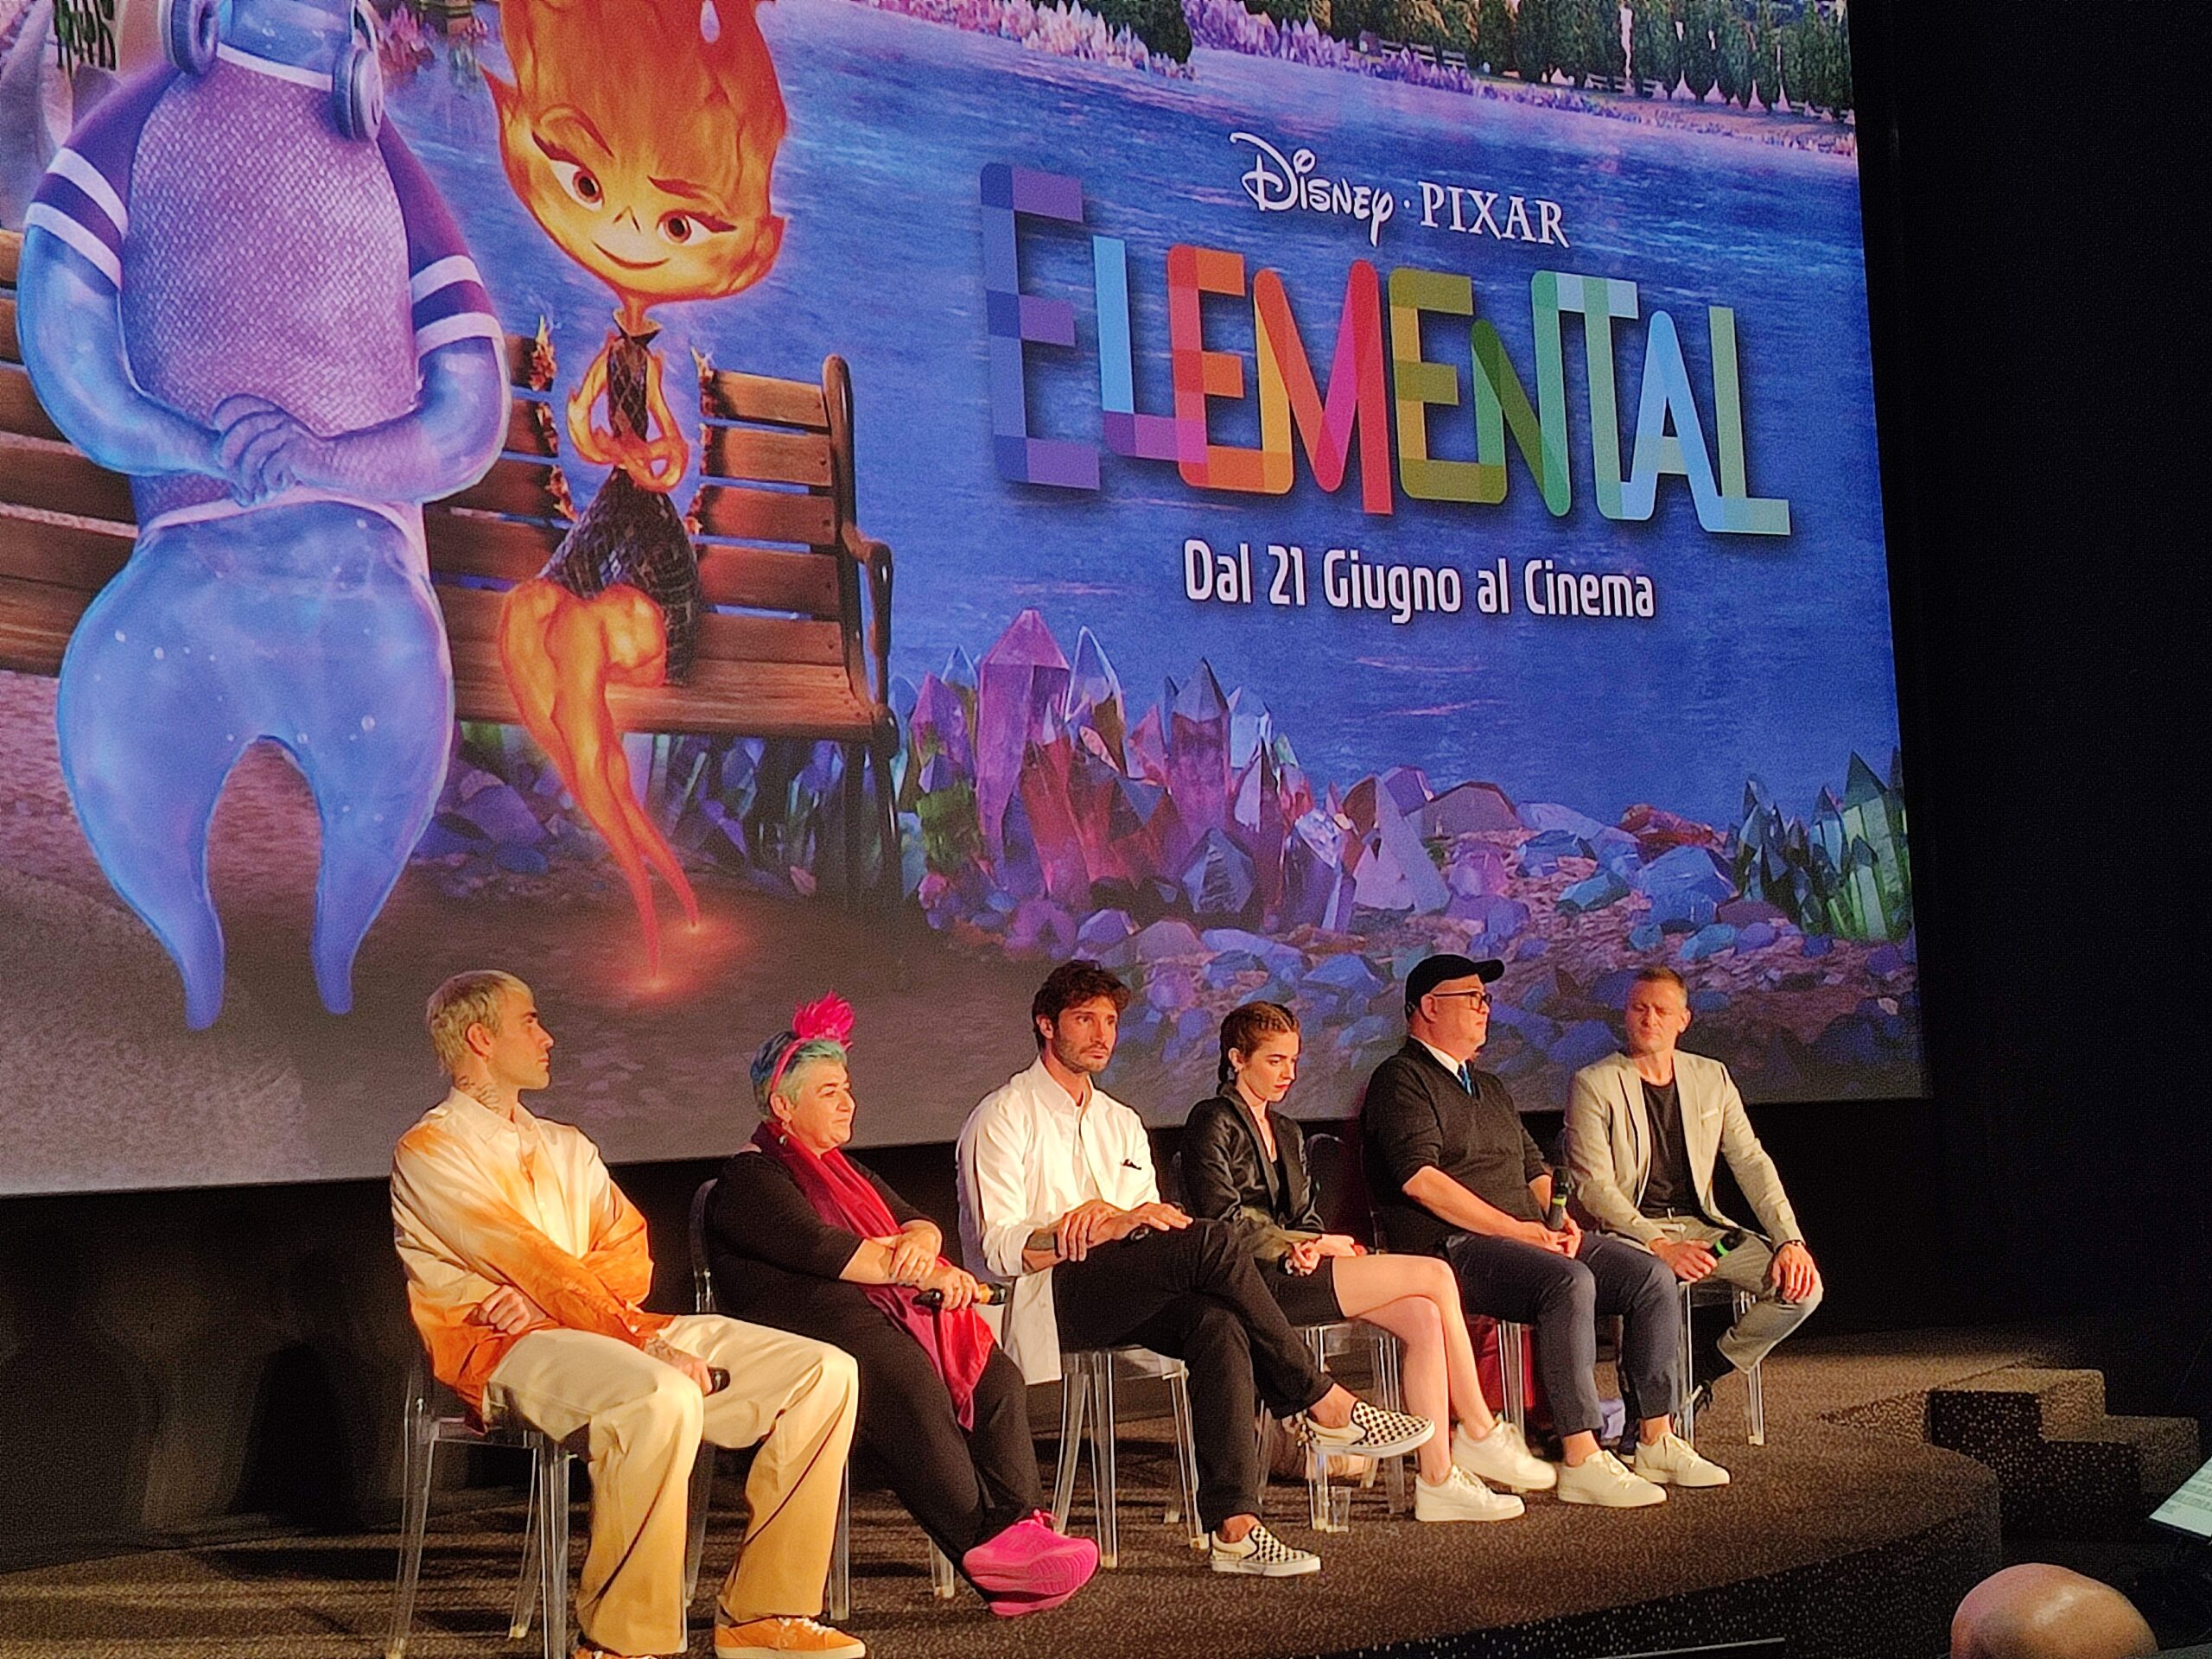 Conferenza stampa del film PIXAR "Elemental"